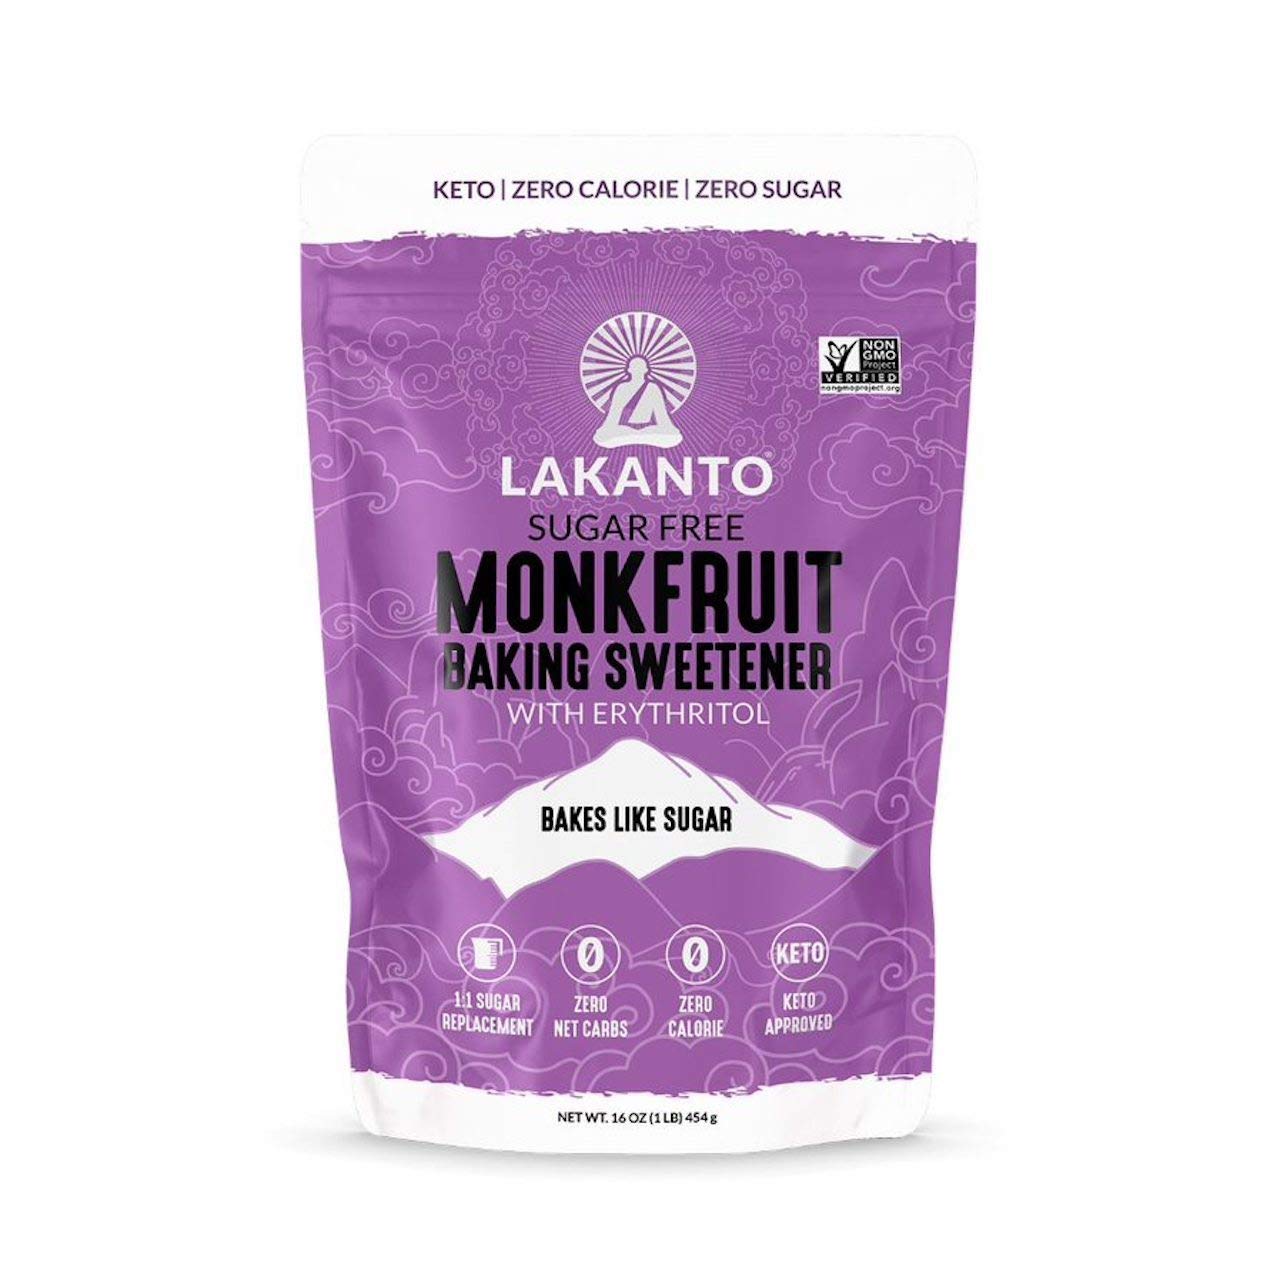 Classic Monkfruit Sweetener with Allulose - White Sugar Replacement –  Lakanto